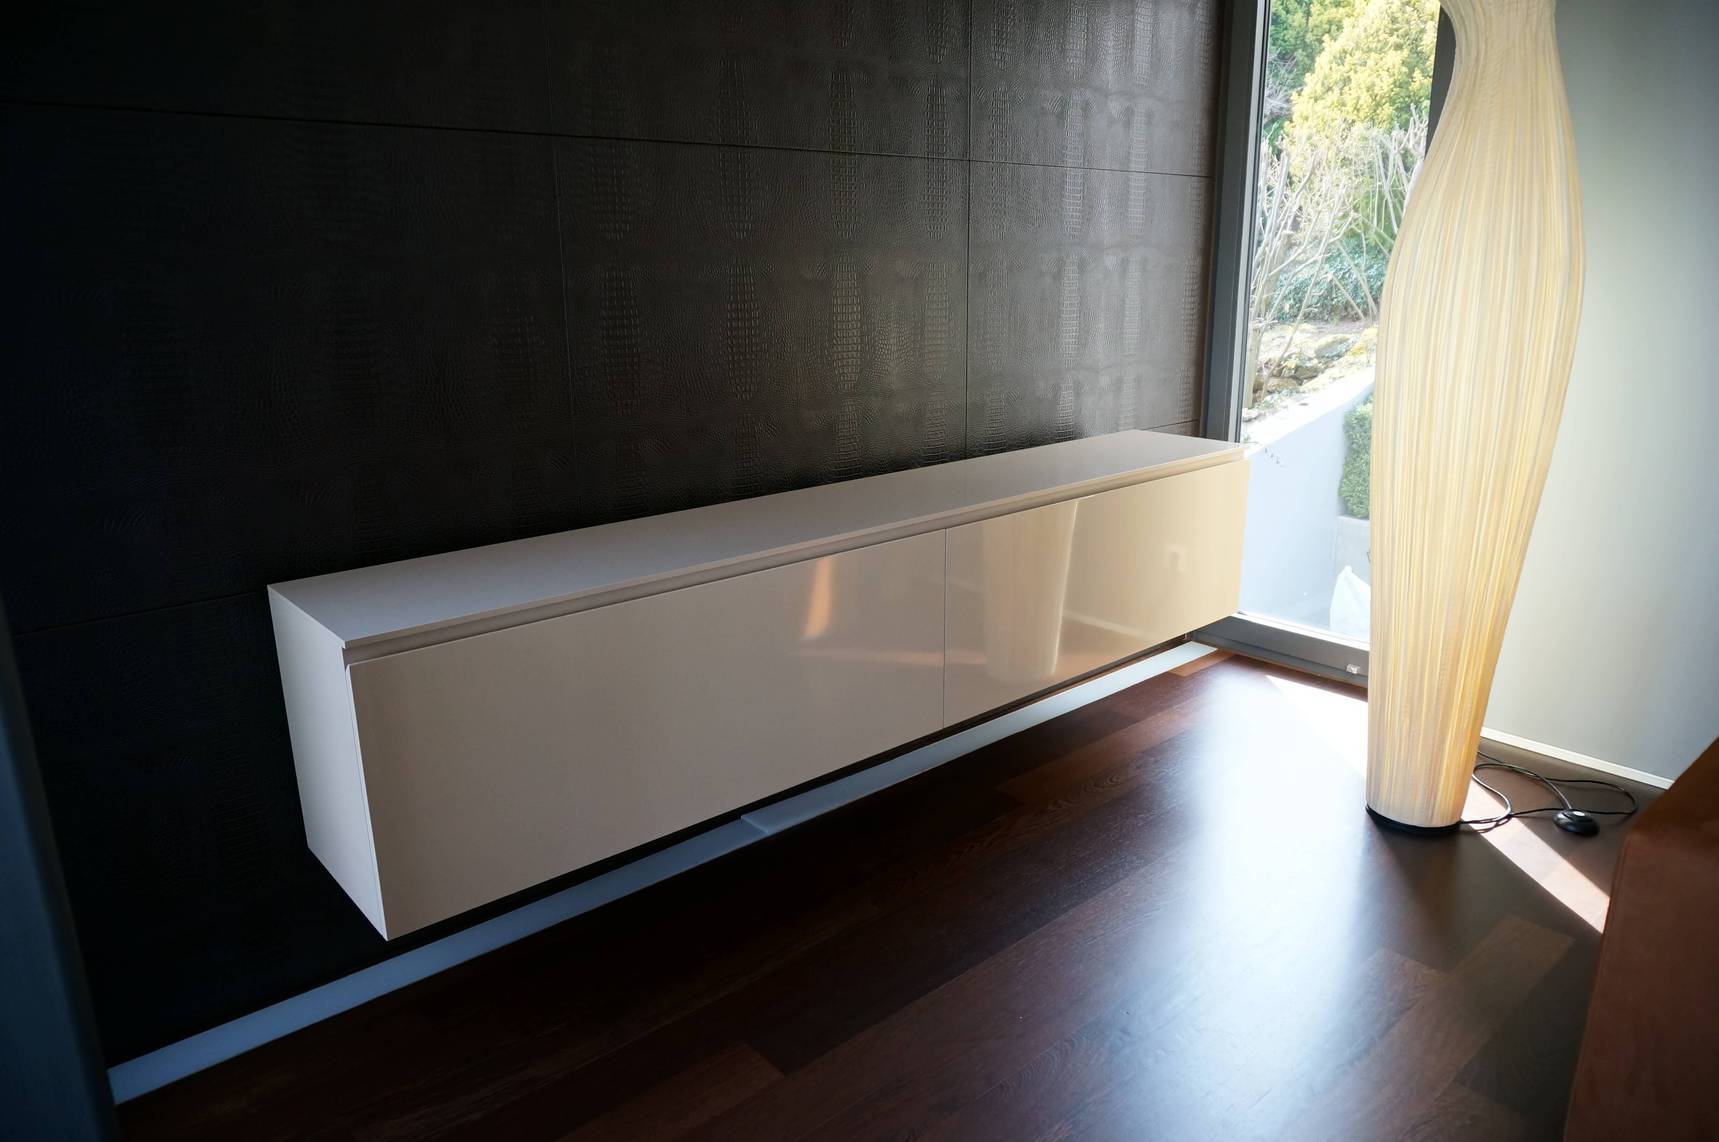 resimdo Wohnzimmer sideboard weiss hochglanz Shiny White Gloss HS204